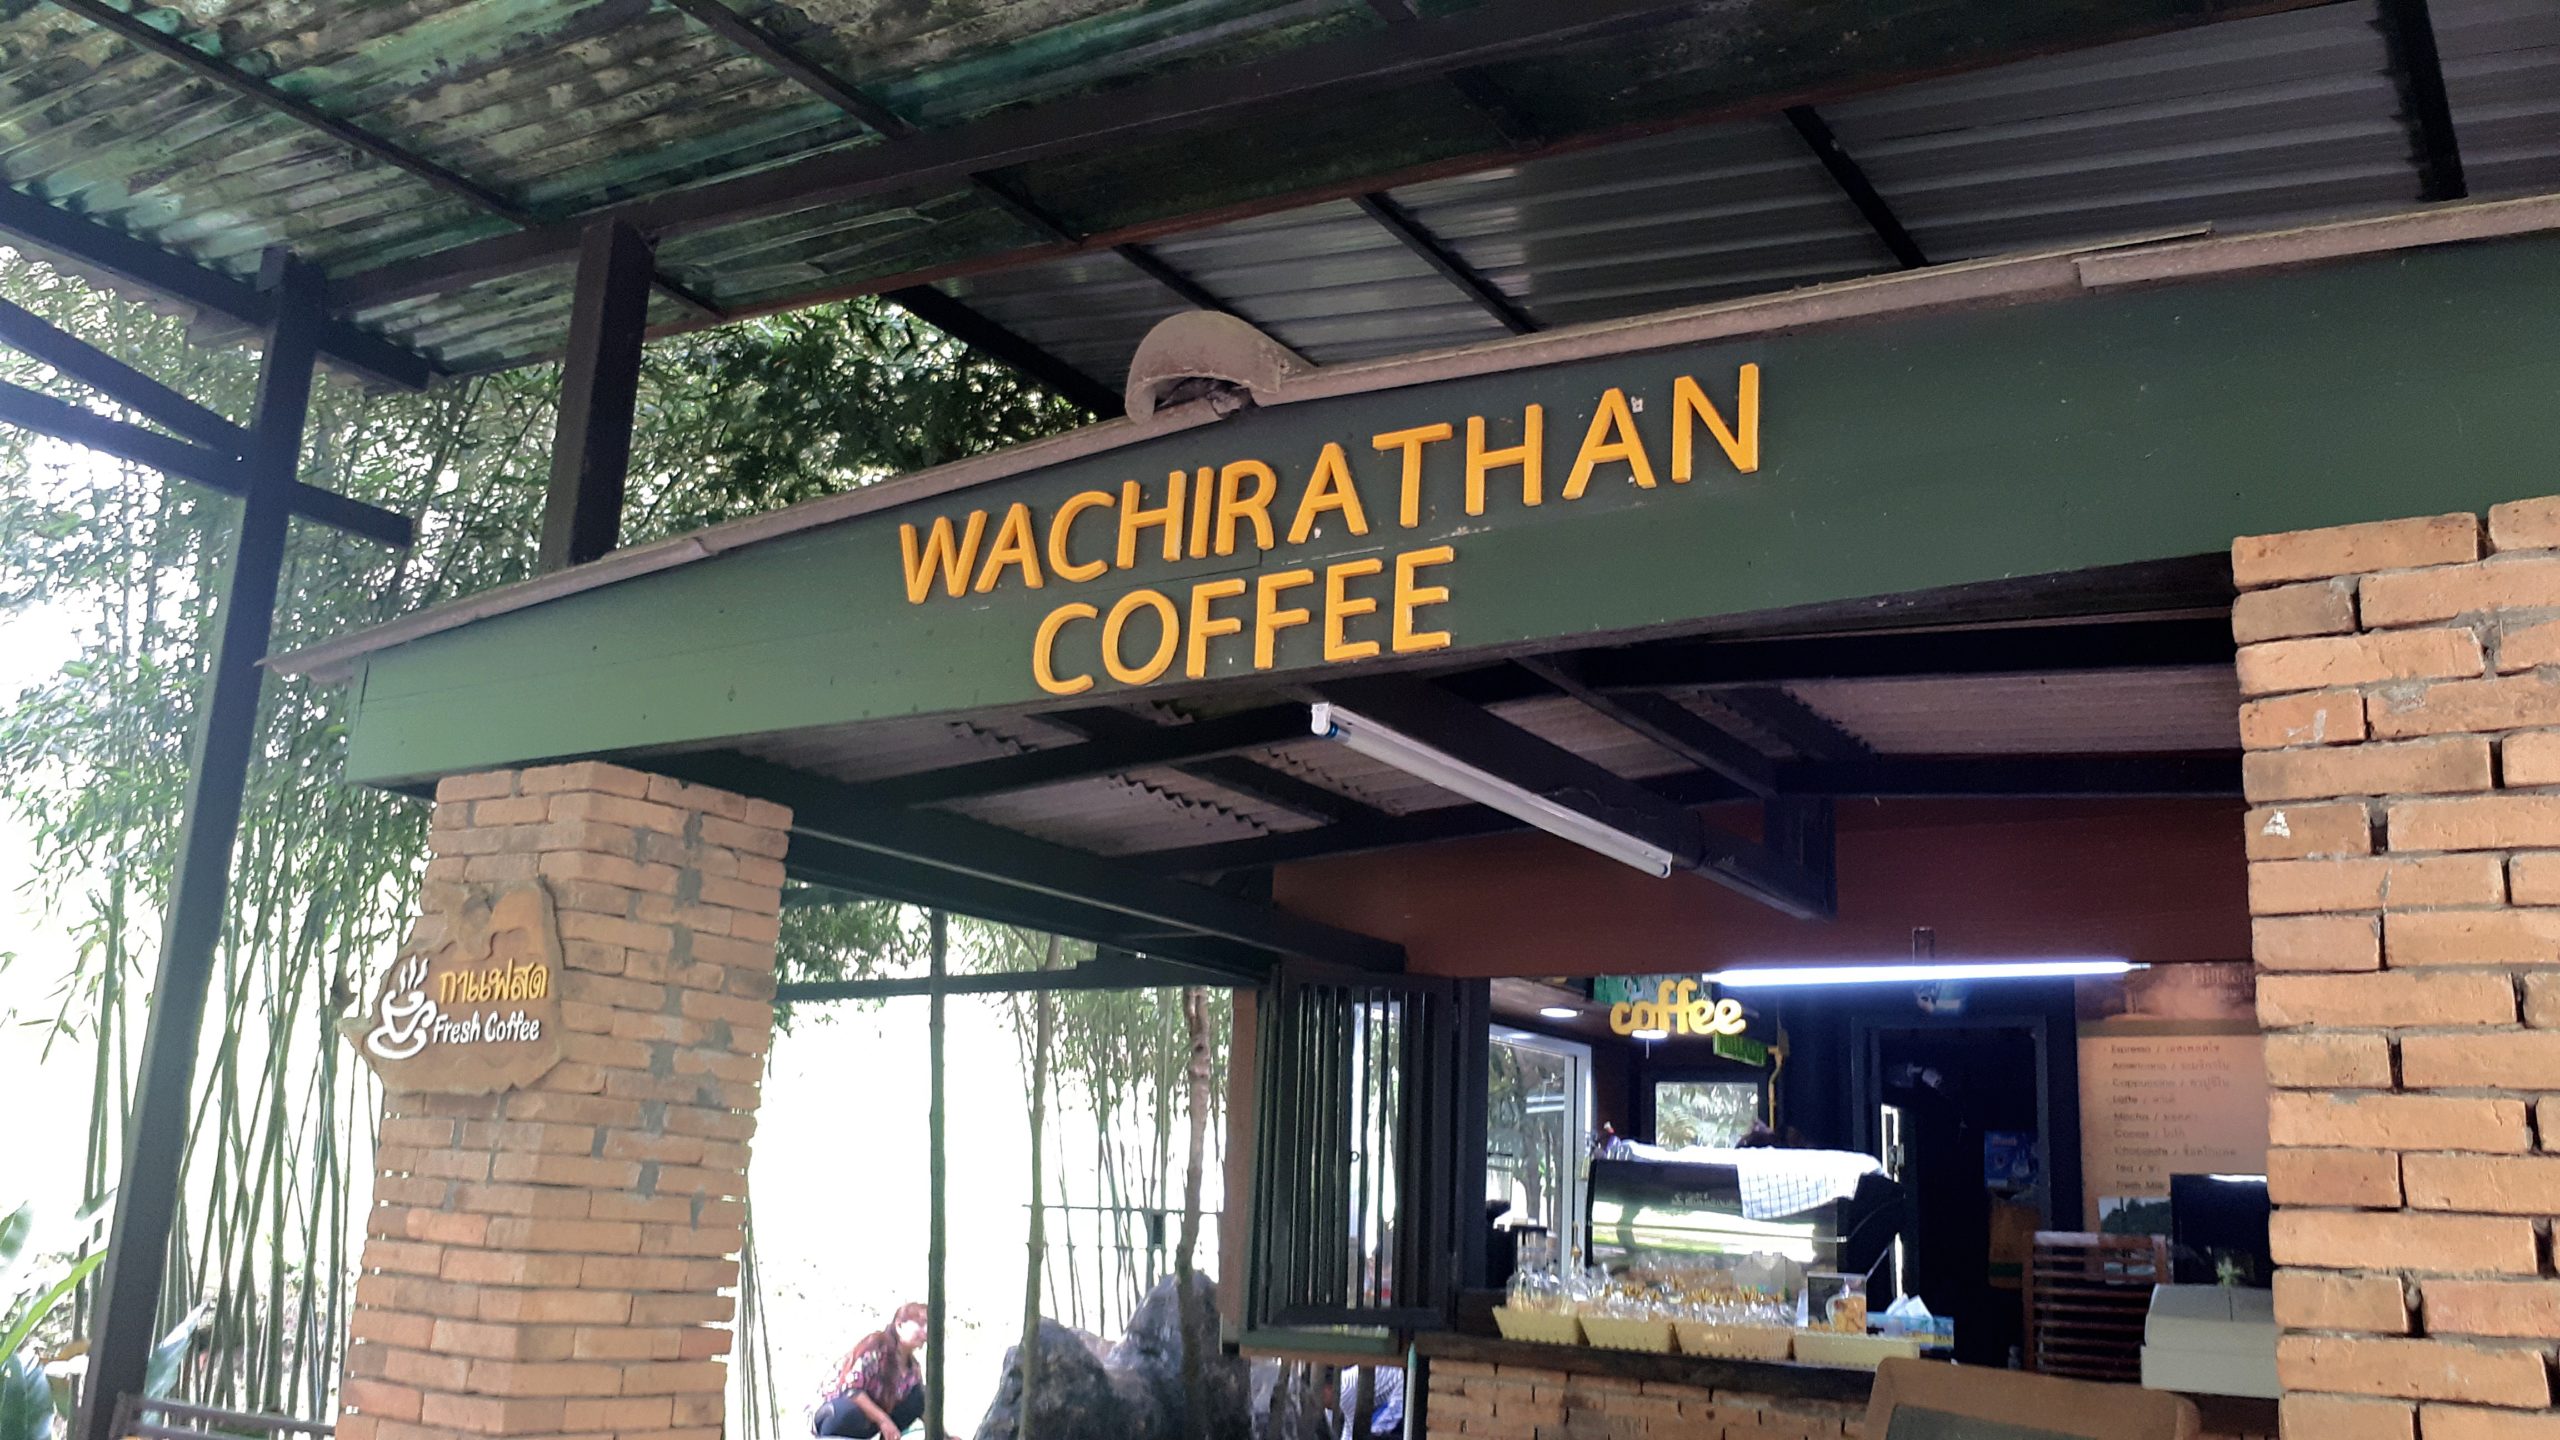 Wachirathan Coffee